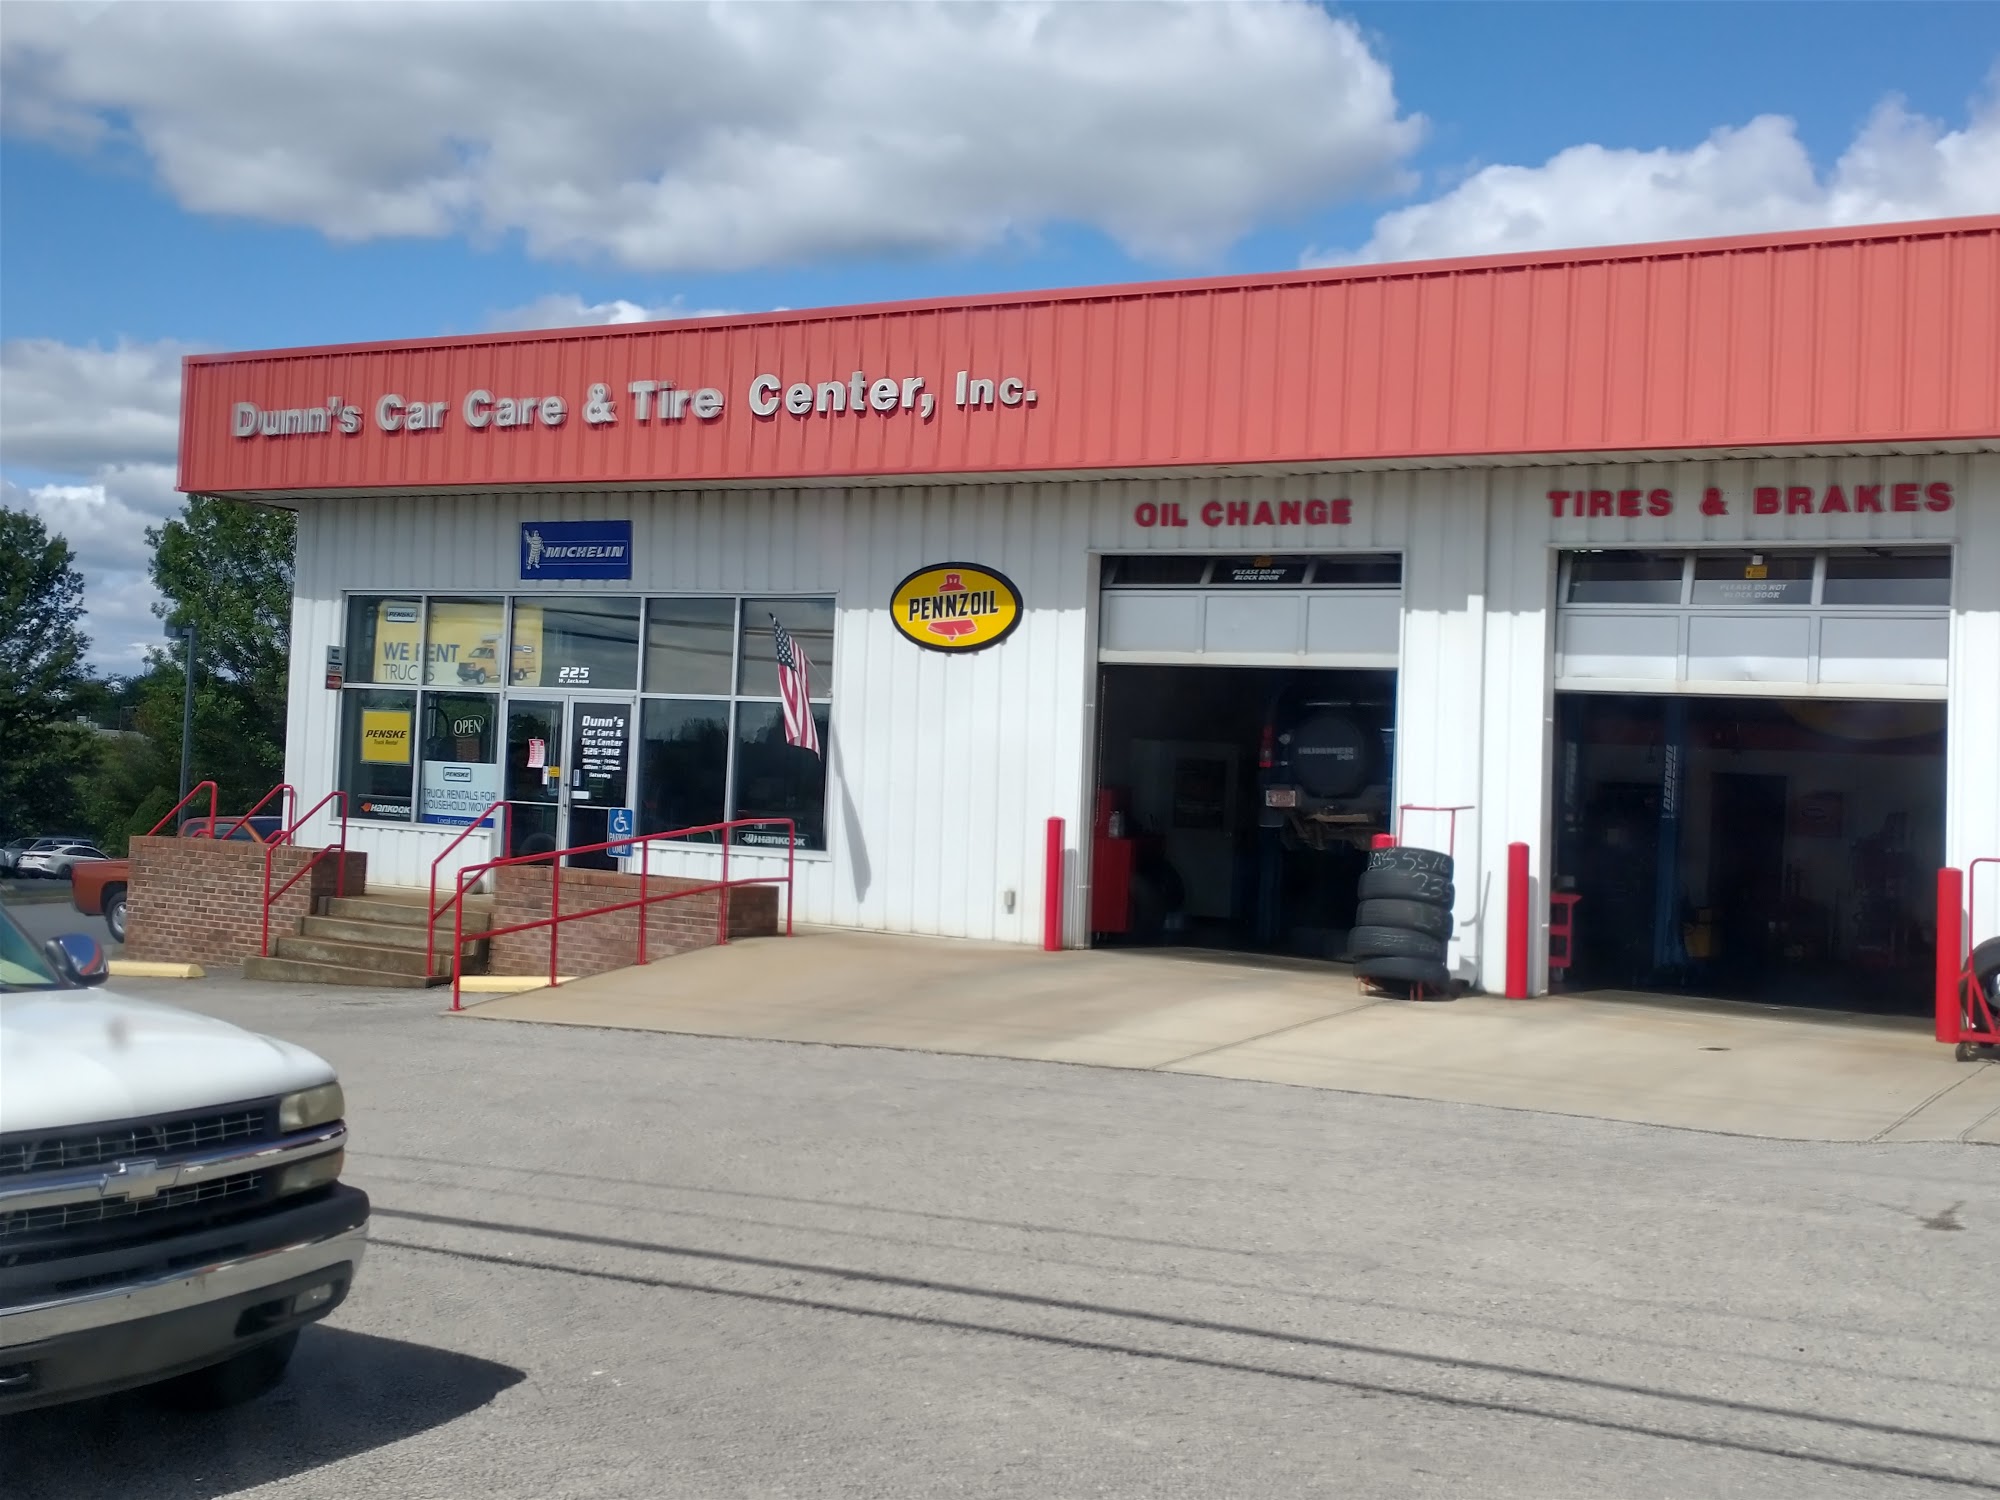 Dunn's Car Care & Tire Center